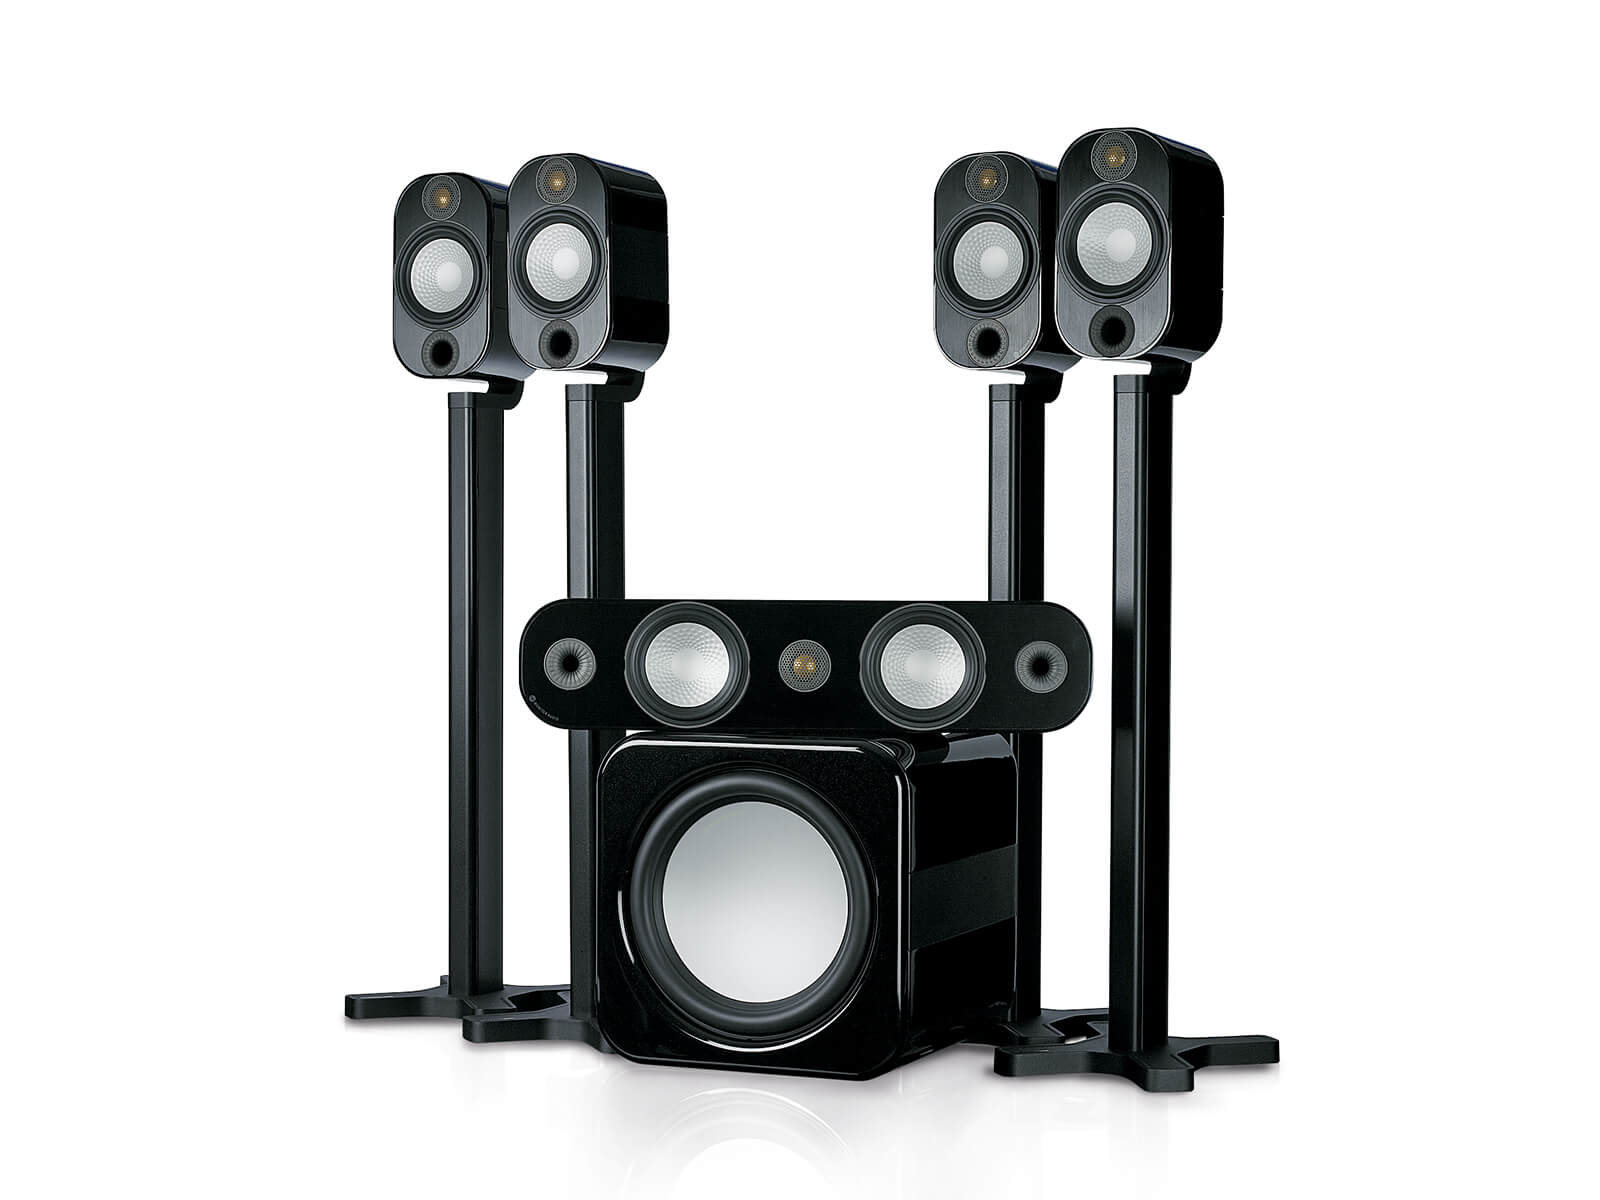 Apex A10AV12 speaker system, with a metallic black high gloss finish.